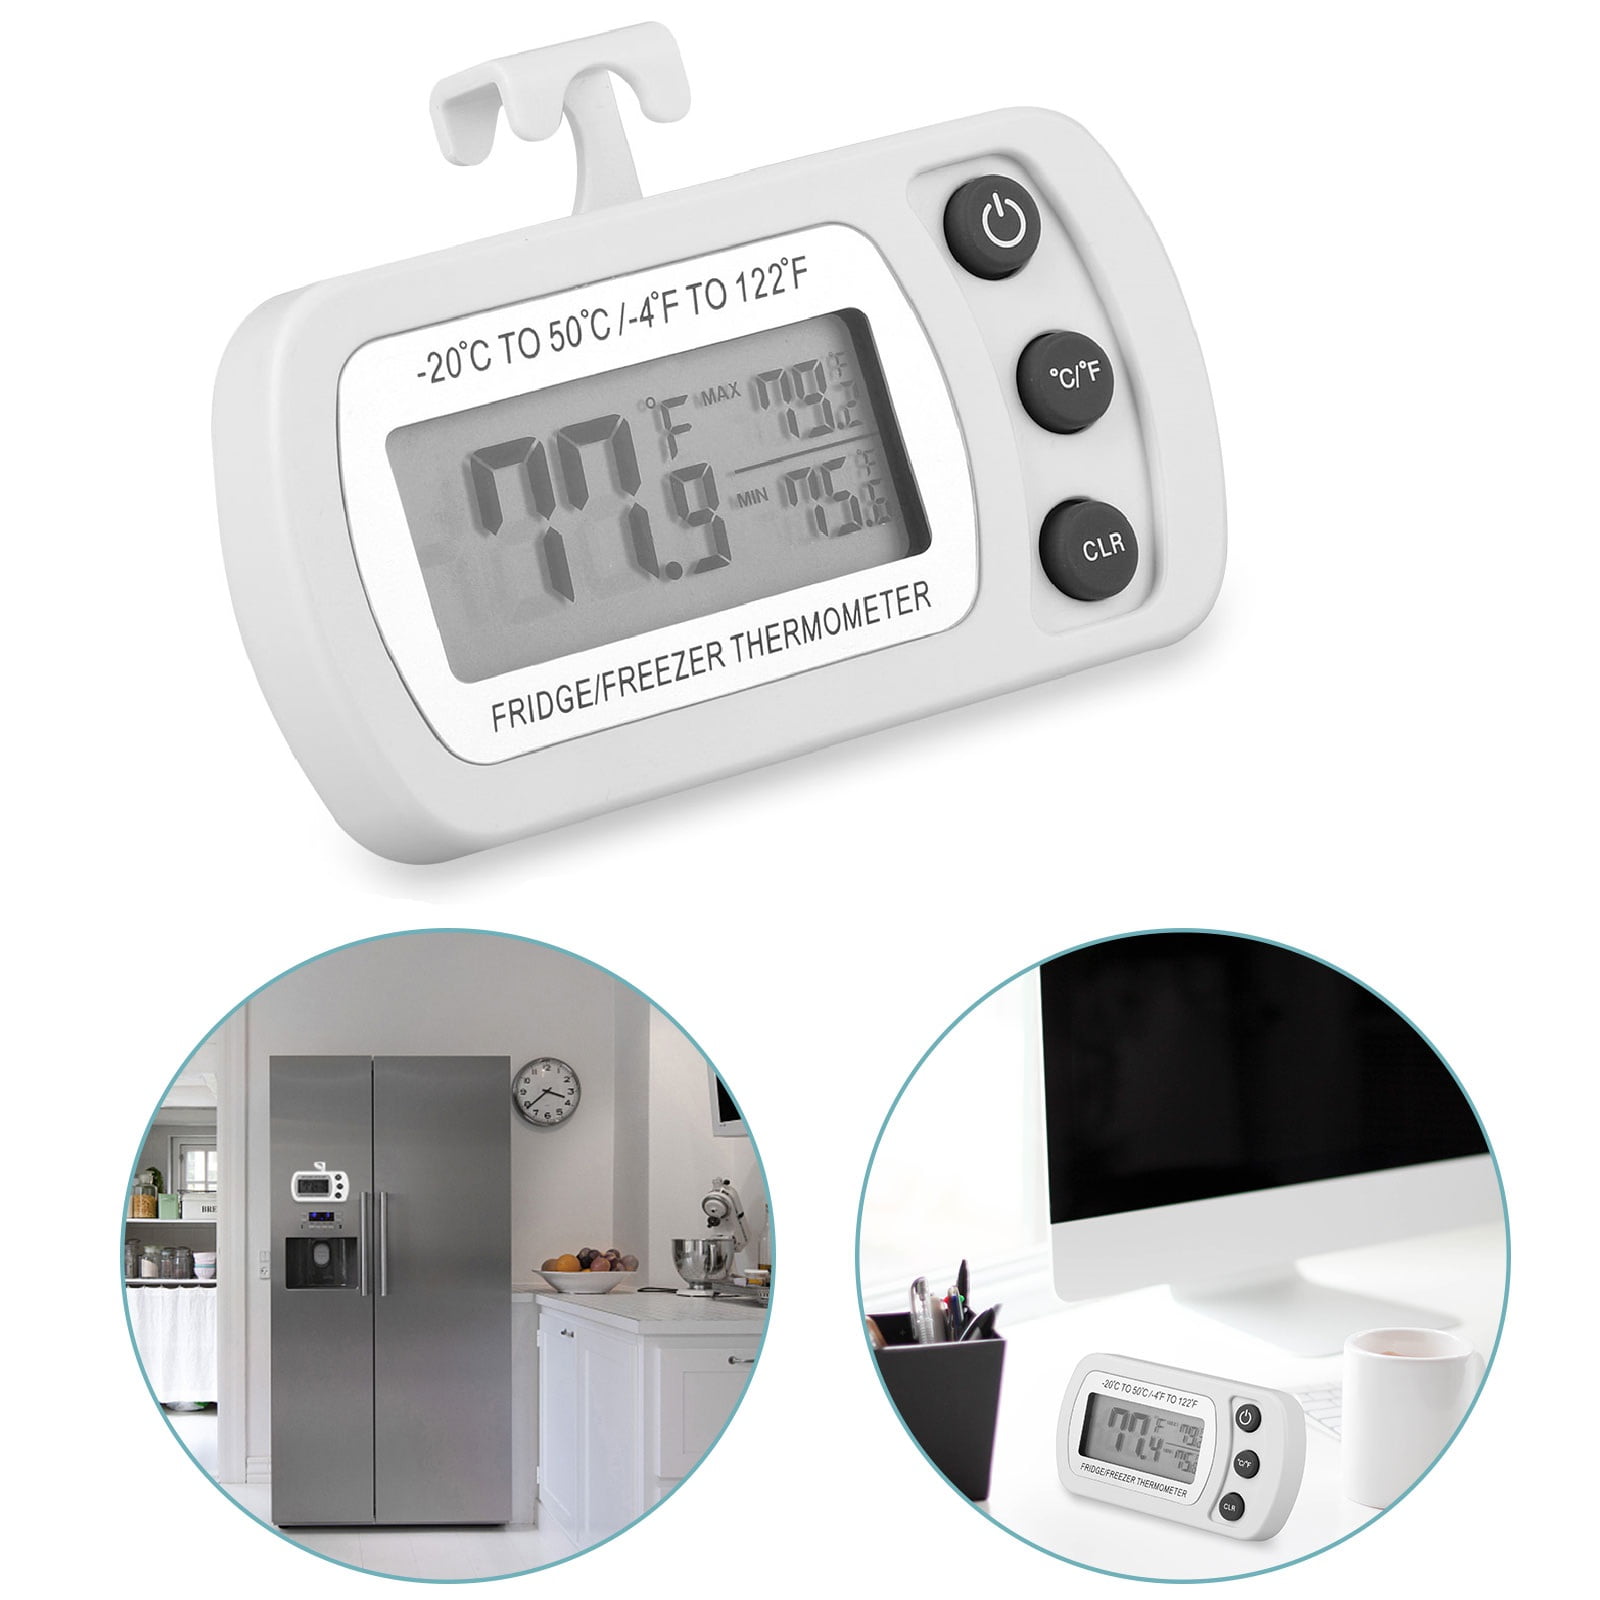 1 Pcs freezer/fridge thermometer for food storage temperature measurement JP 